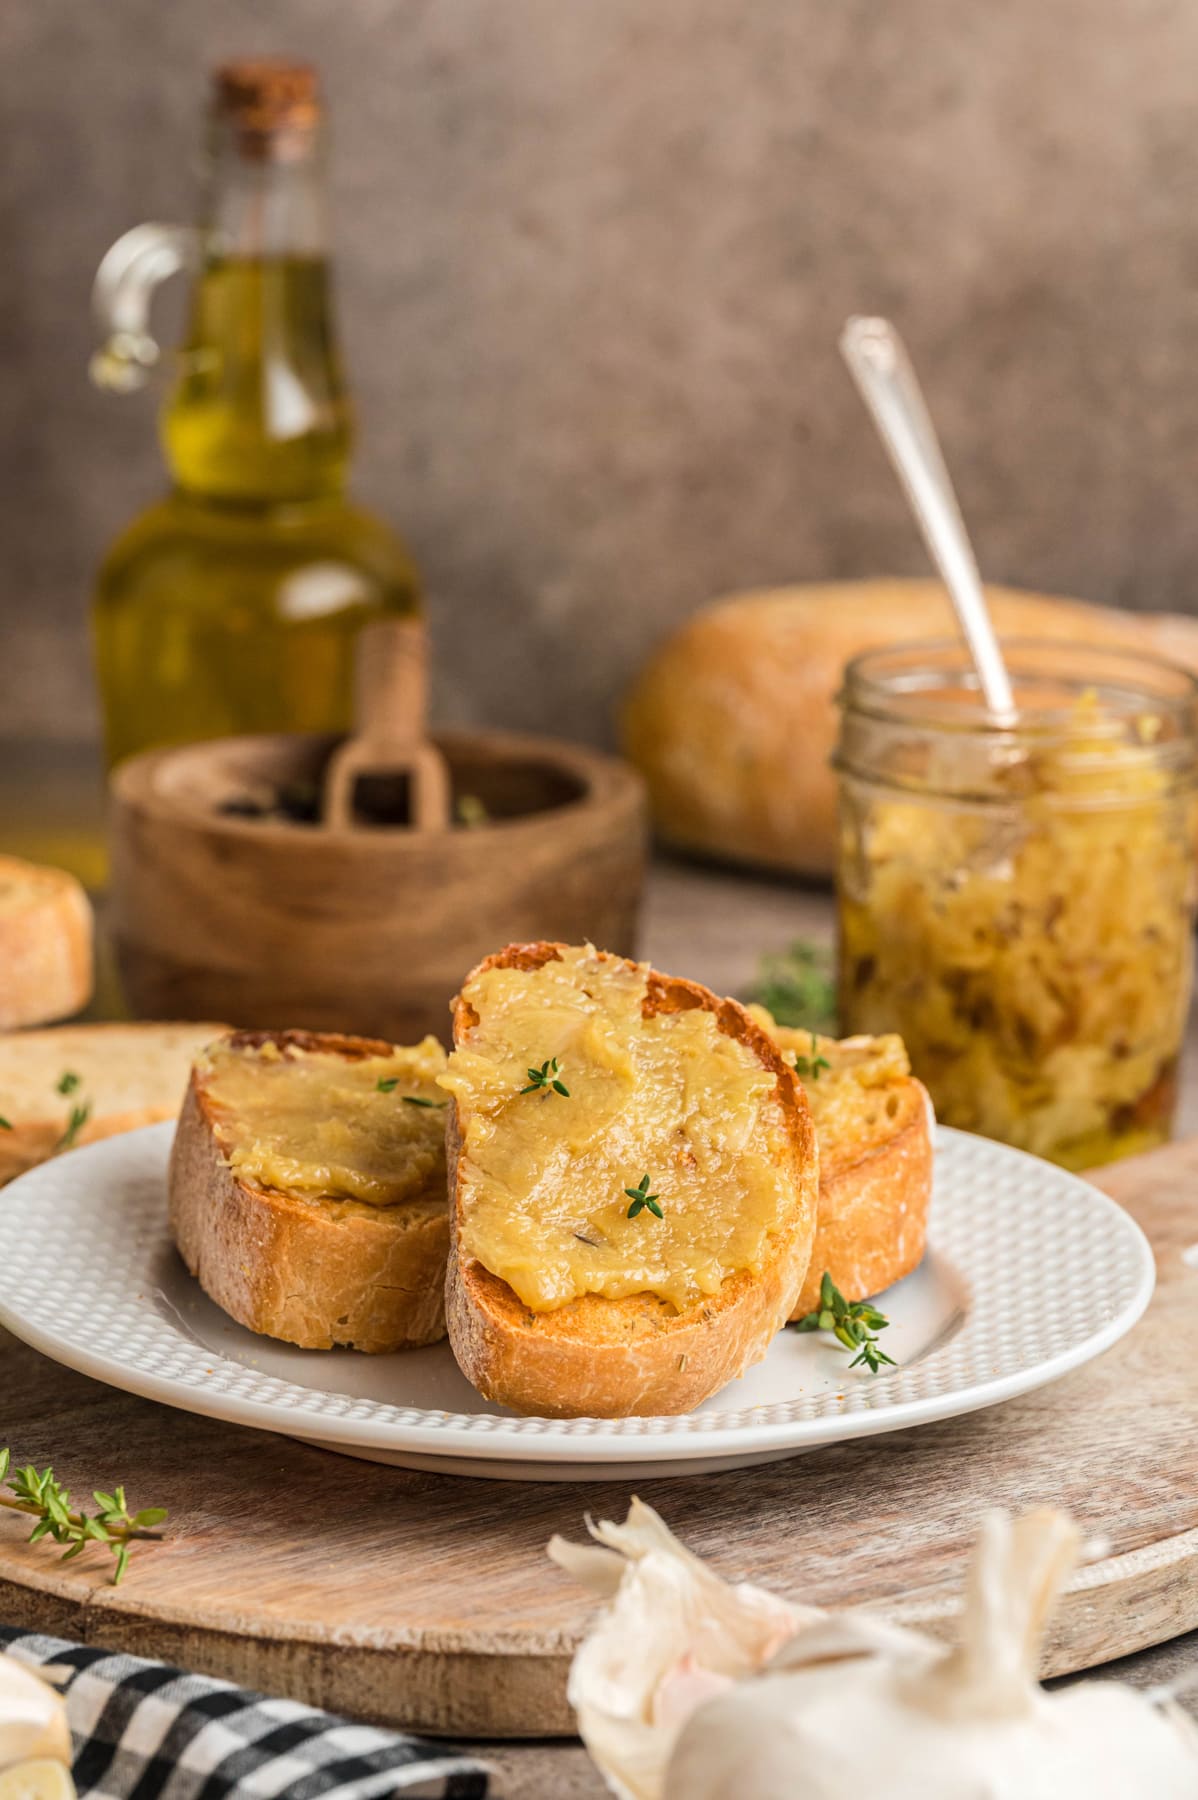 Garlic confit spread on toast